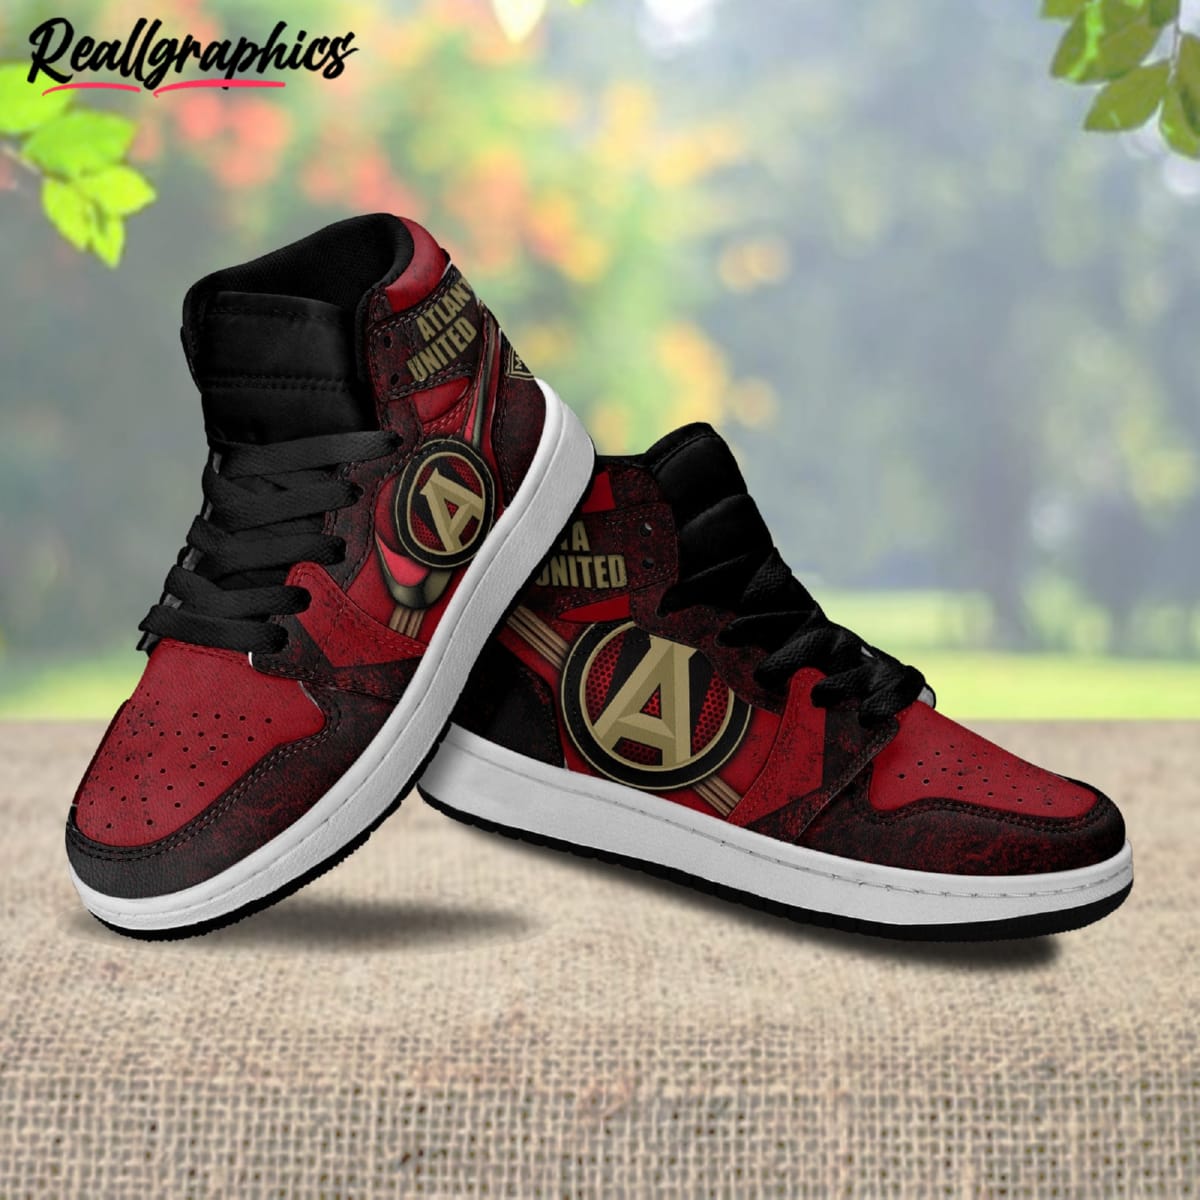 atlanta-united-air-jordan-high-sneakers-custom-sport-shoes-2